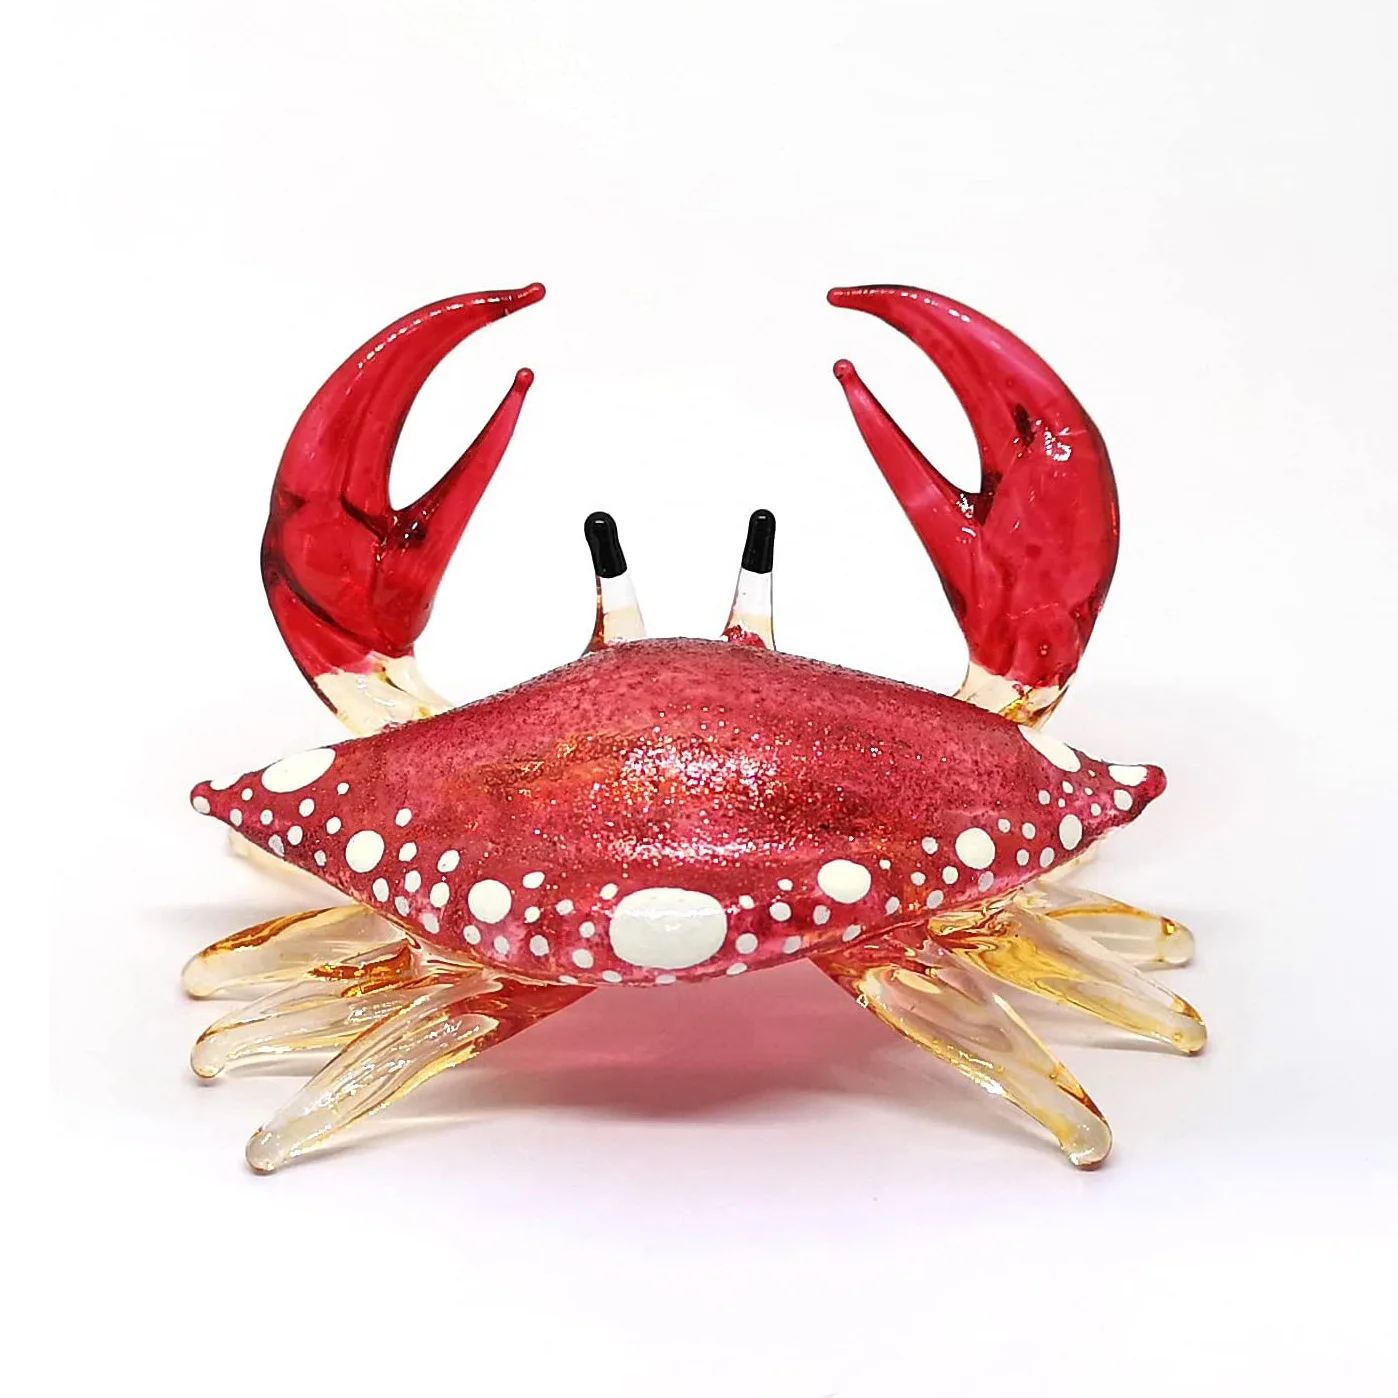 Blown Glass Animal Red Crab Art Decor Handmade Figurine Gift Collectible 